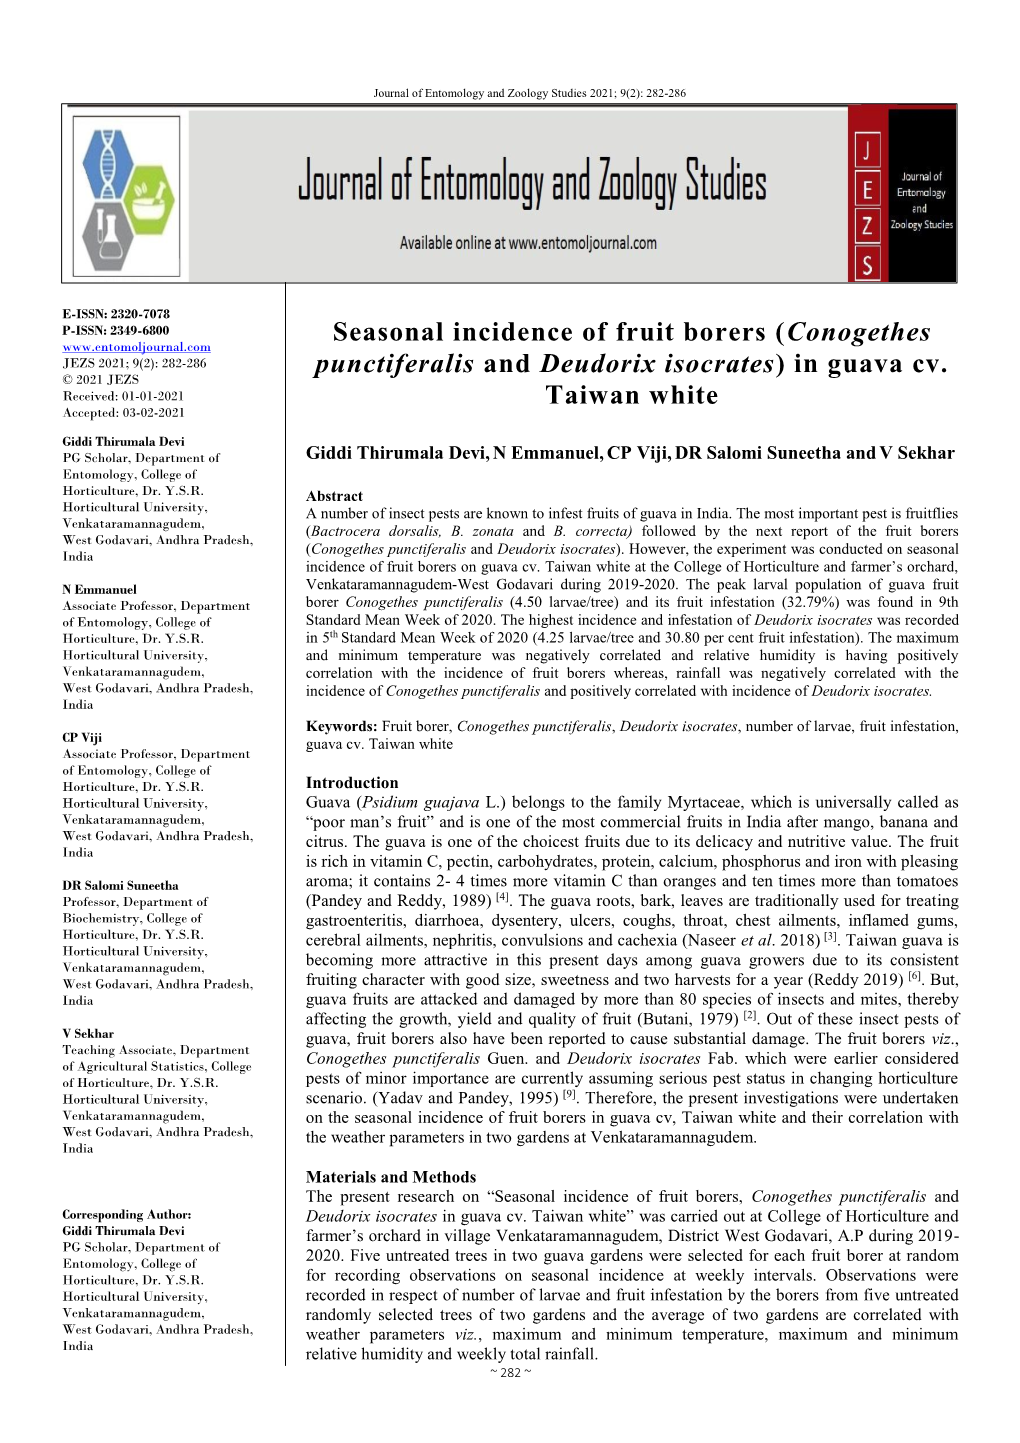 Seasonal Incidence of Fruit Borers (Conogethes Punctiferalis and Deudorix Isocrates) in Guava Cv. Taiwan White